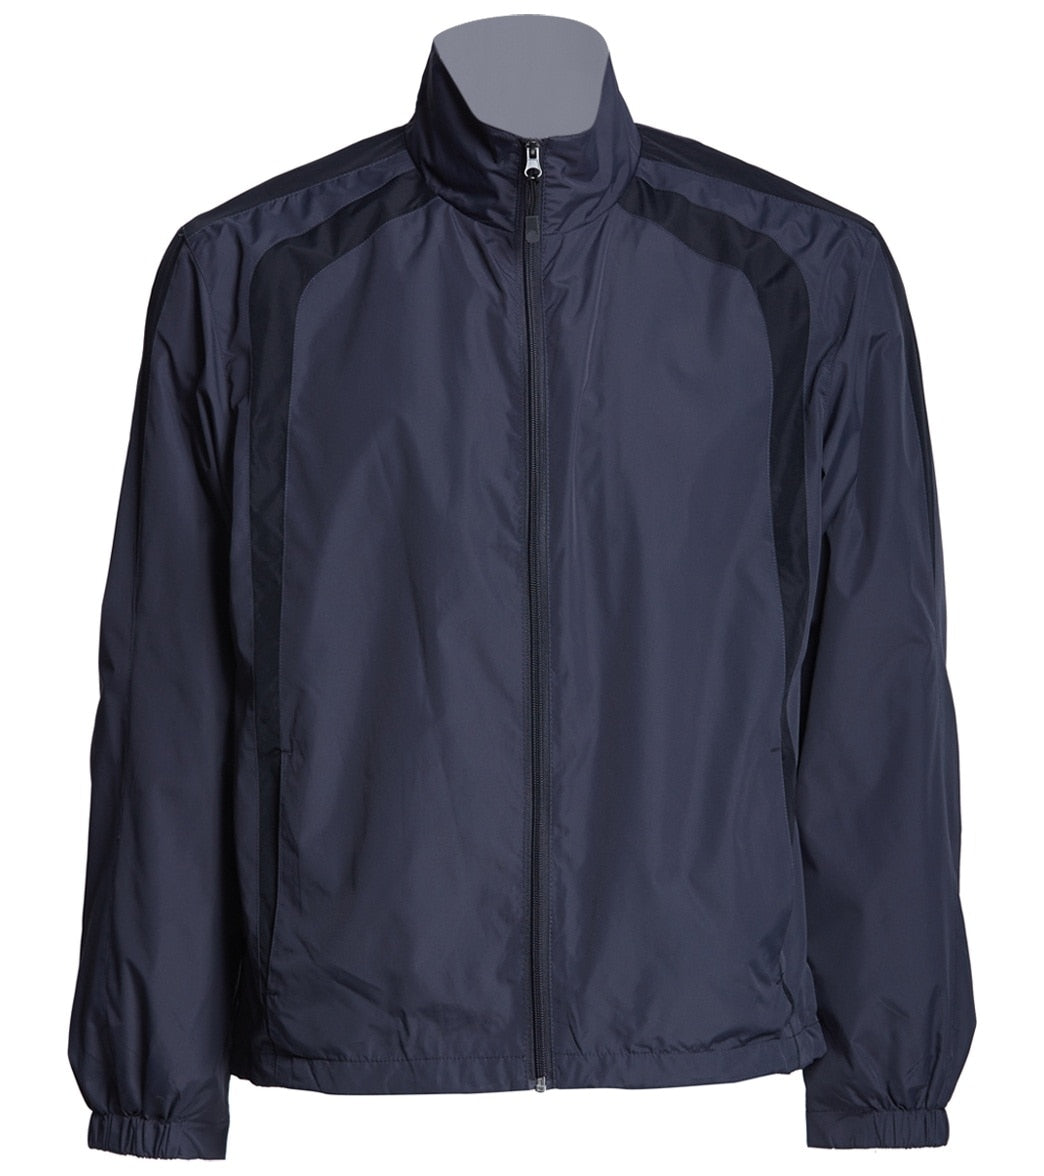 Men's Warm Up Jacket - Graphite Grey/Black Large Polyester - Swimoutlet.com